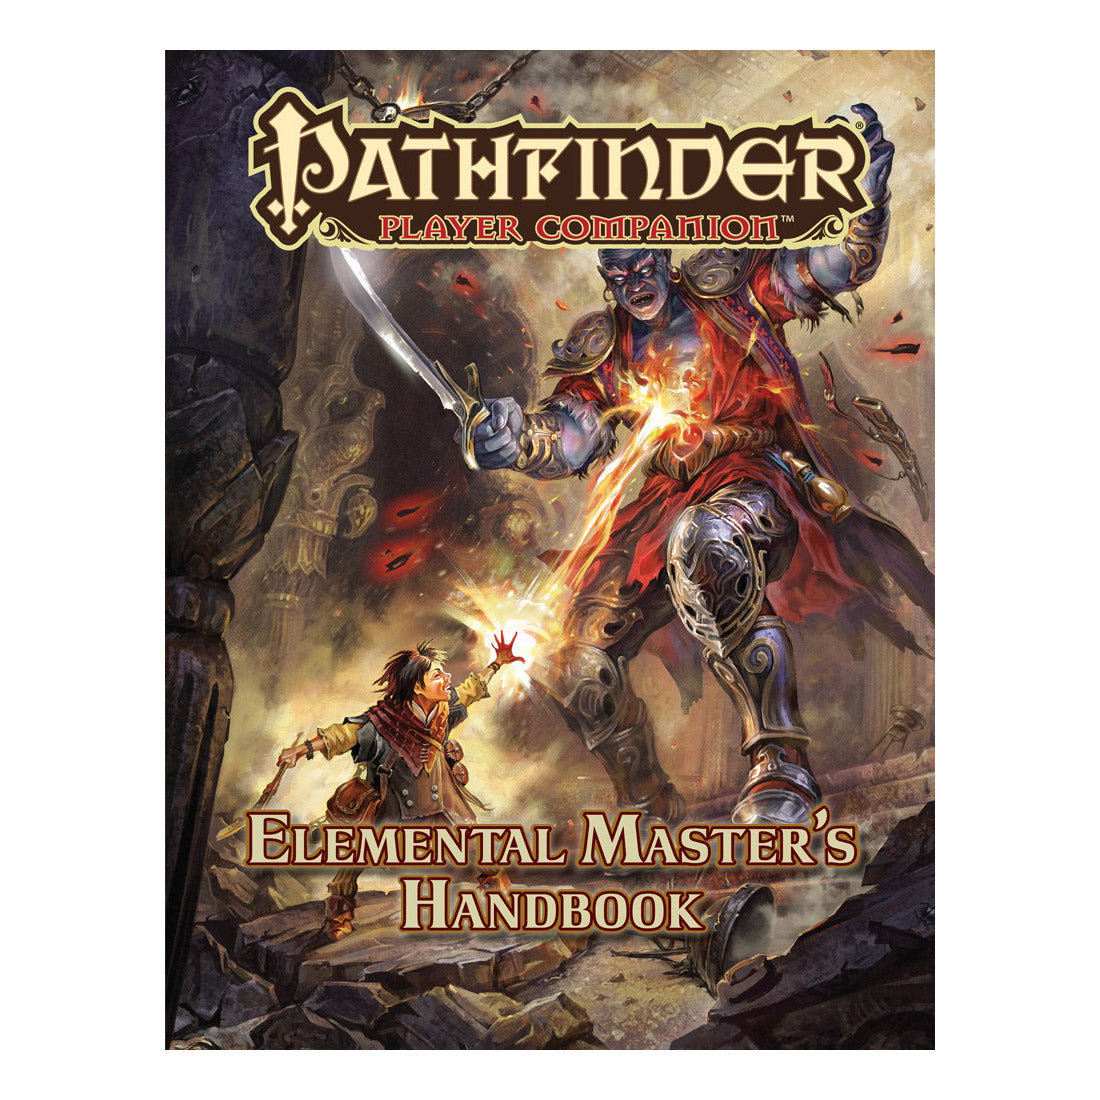 Elemental master. Pathfinder Companions. Красный связующий источник Pathfinder. Pathfinder: Kingmaker - Definitive Edition обложка.